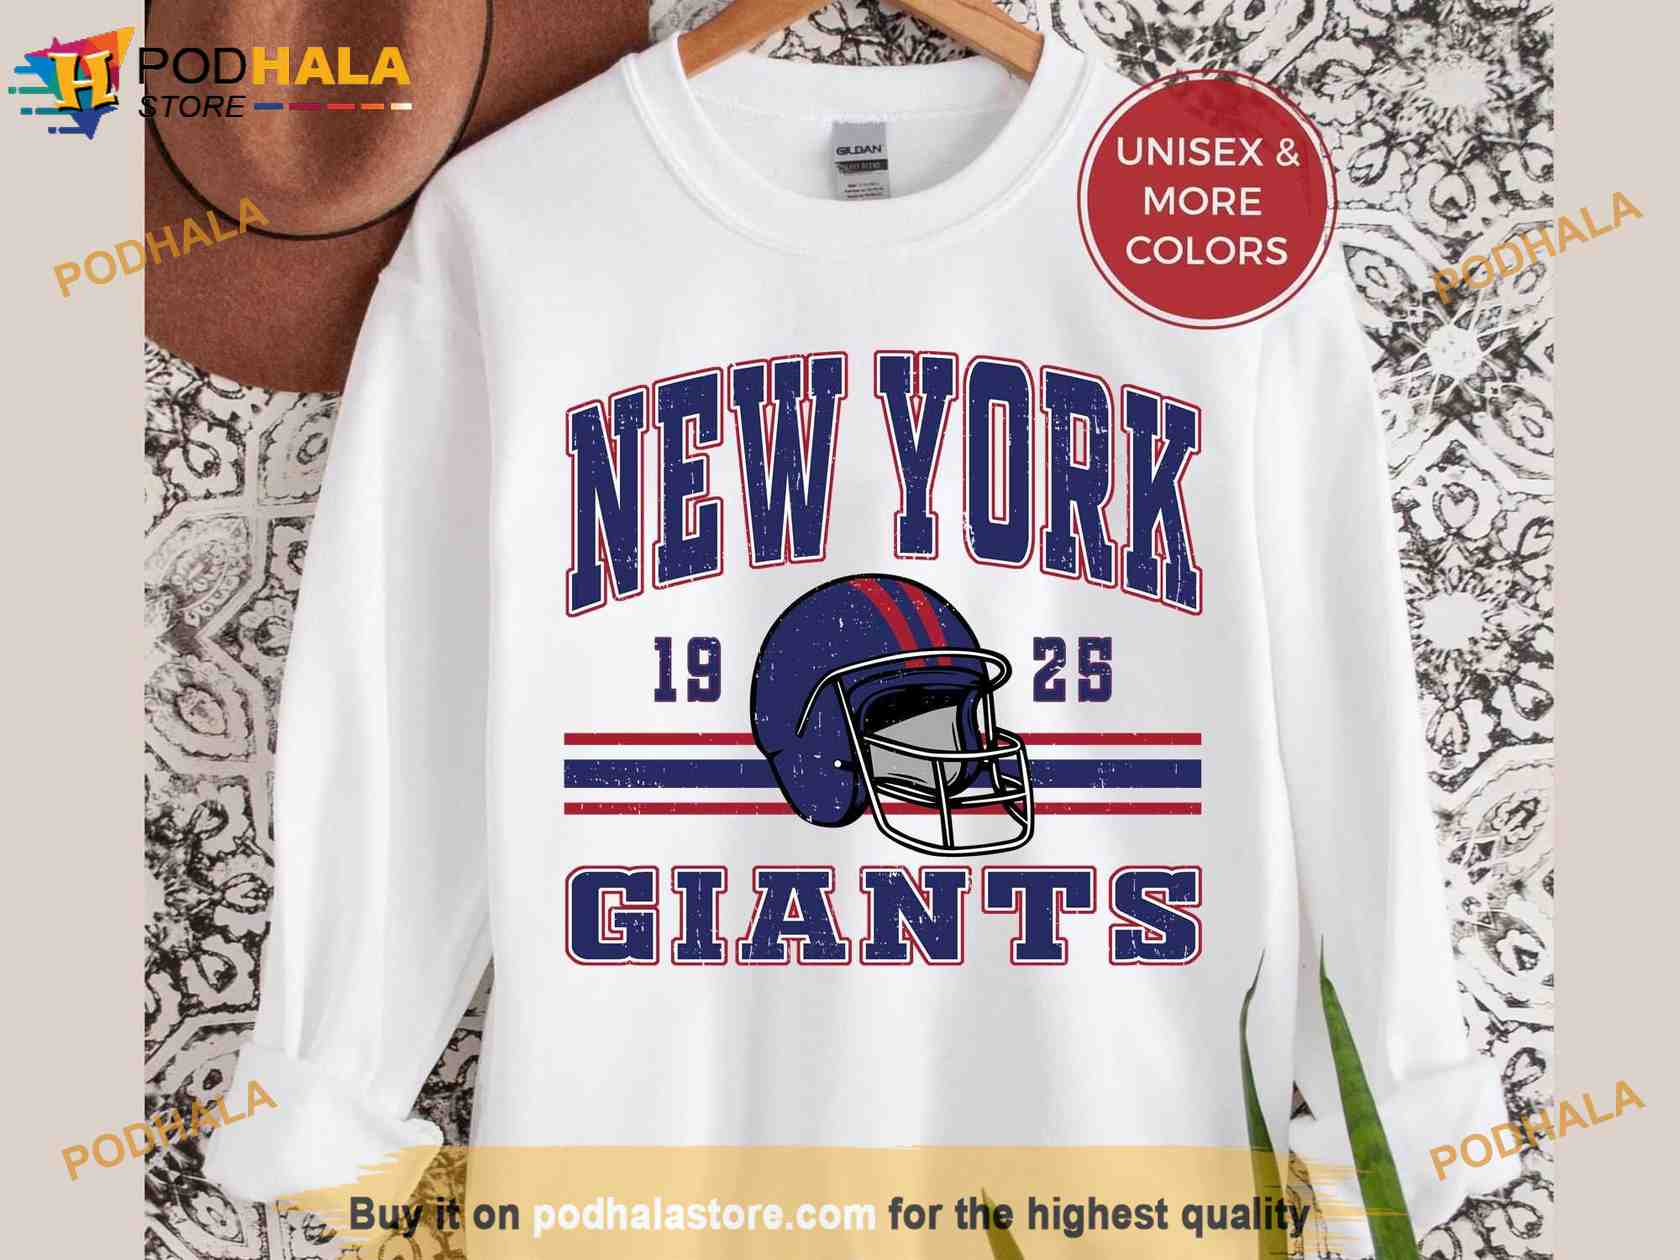 new york giants merchandise near me